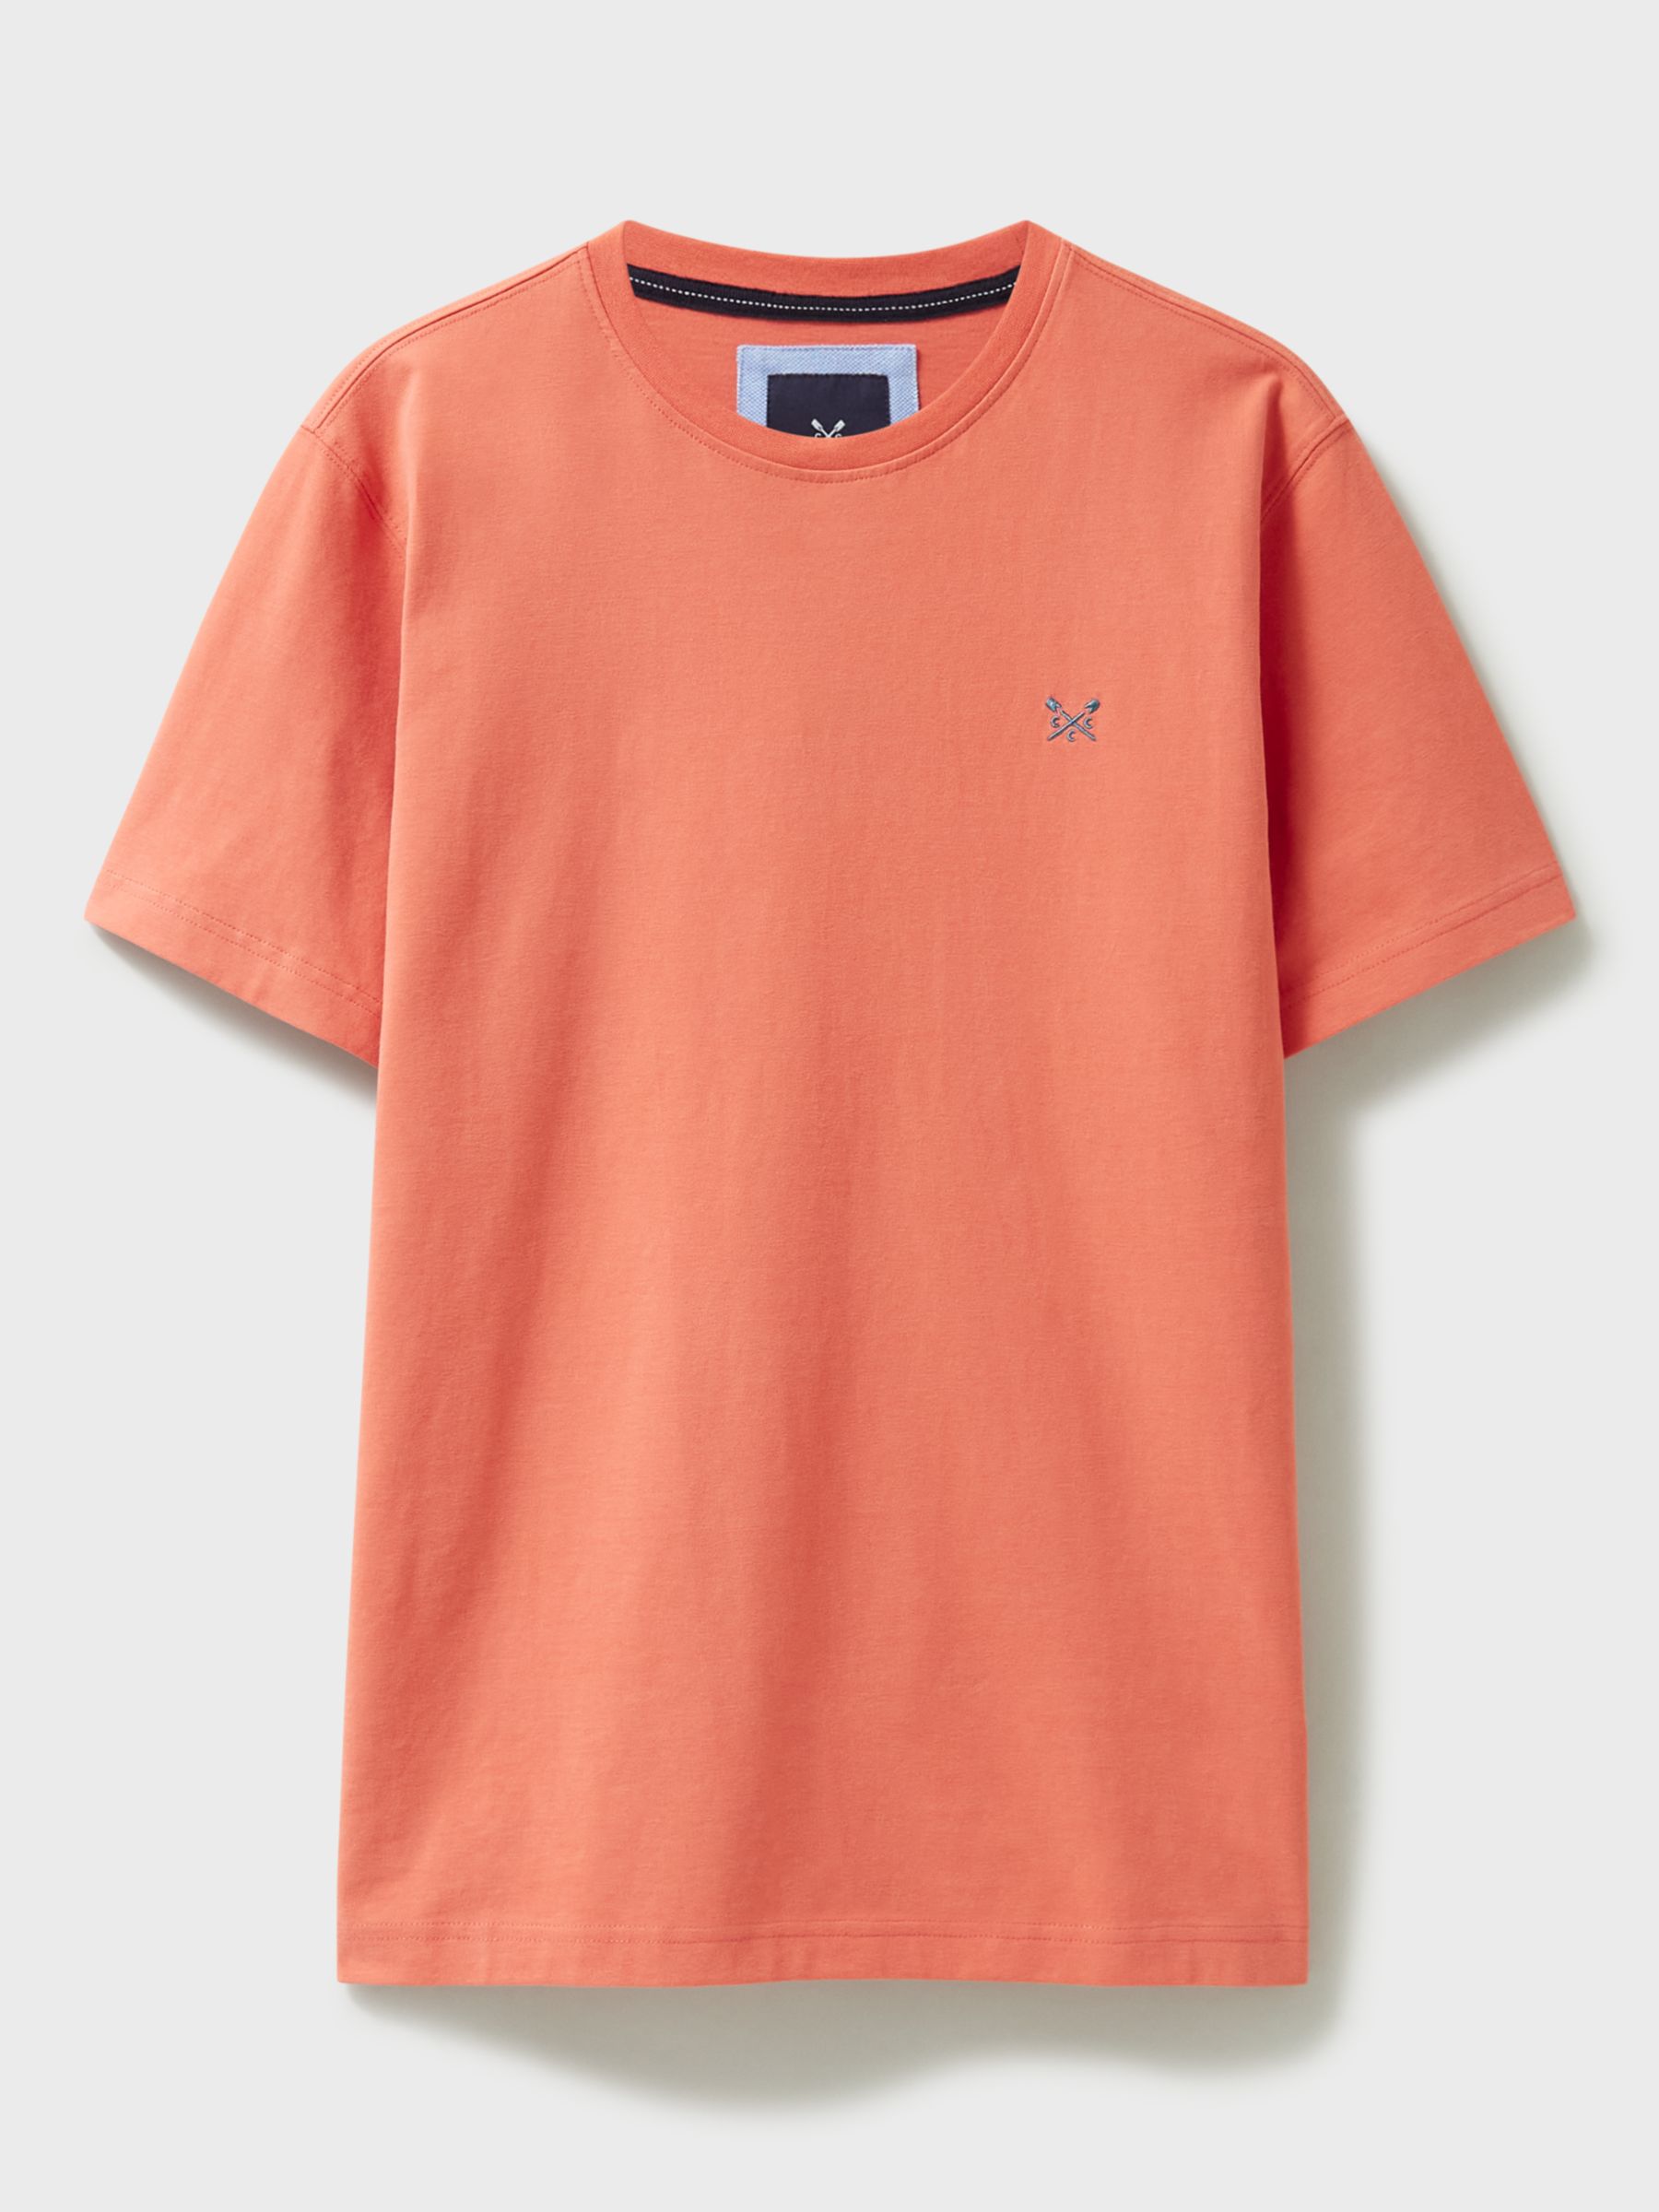 Crew Clothing Crew Neck Cotton T-Shirt, Coral Orange, L